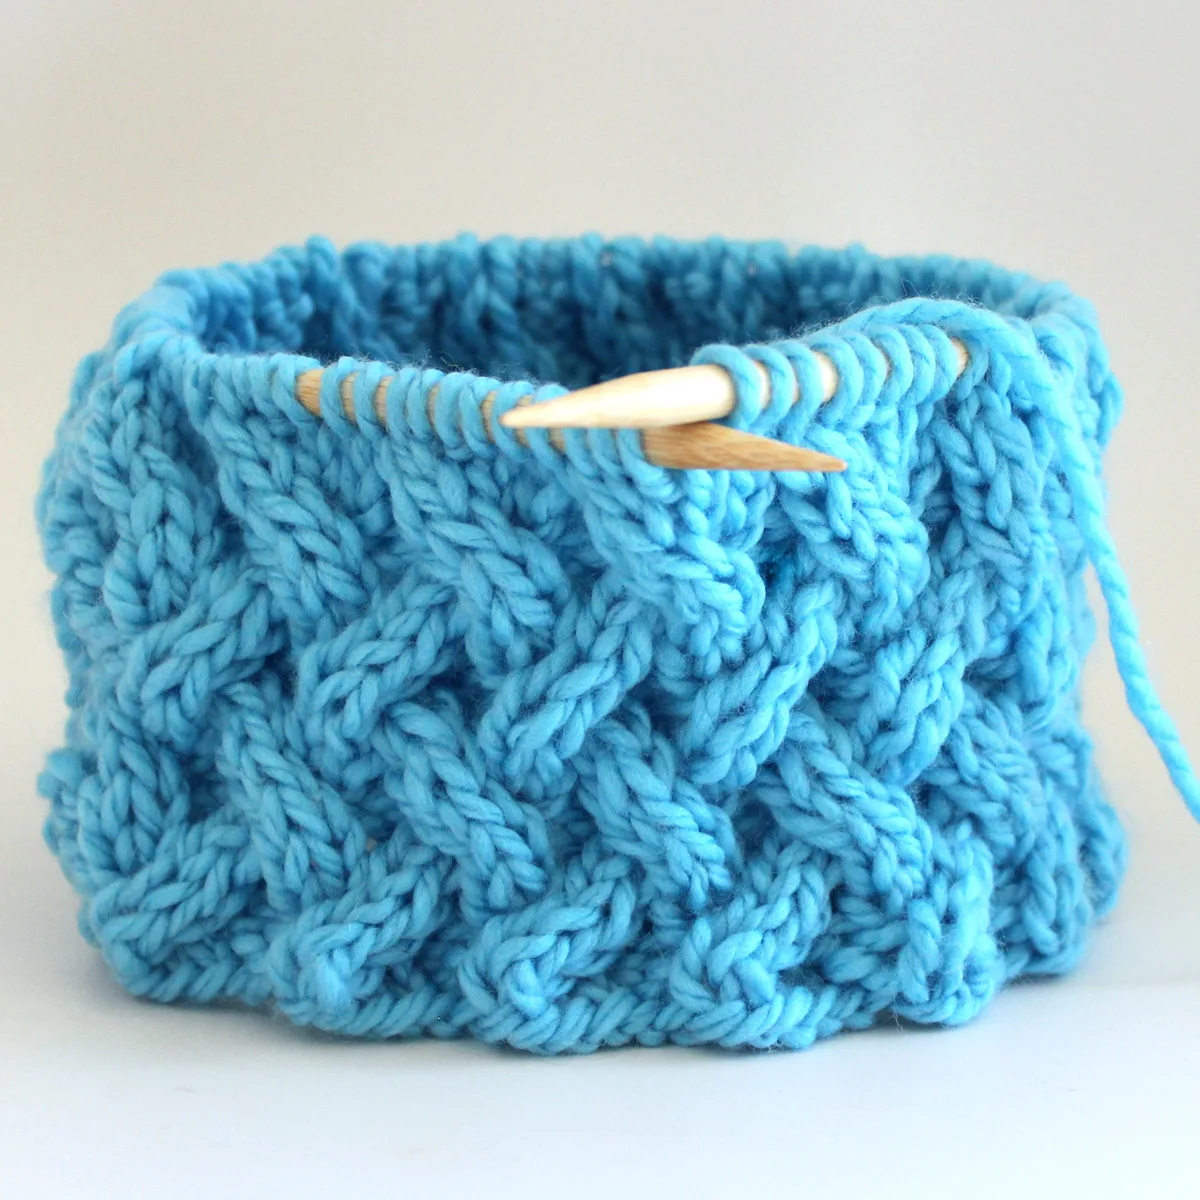 Knitting Supplies for flat, circular, cable knits: needles, sewing